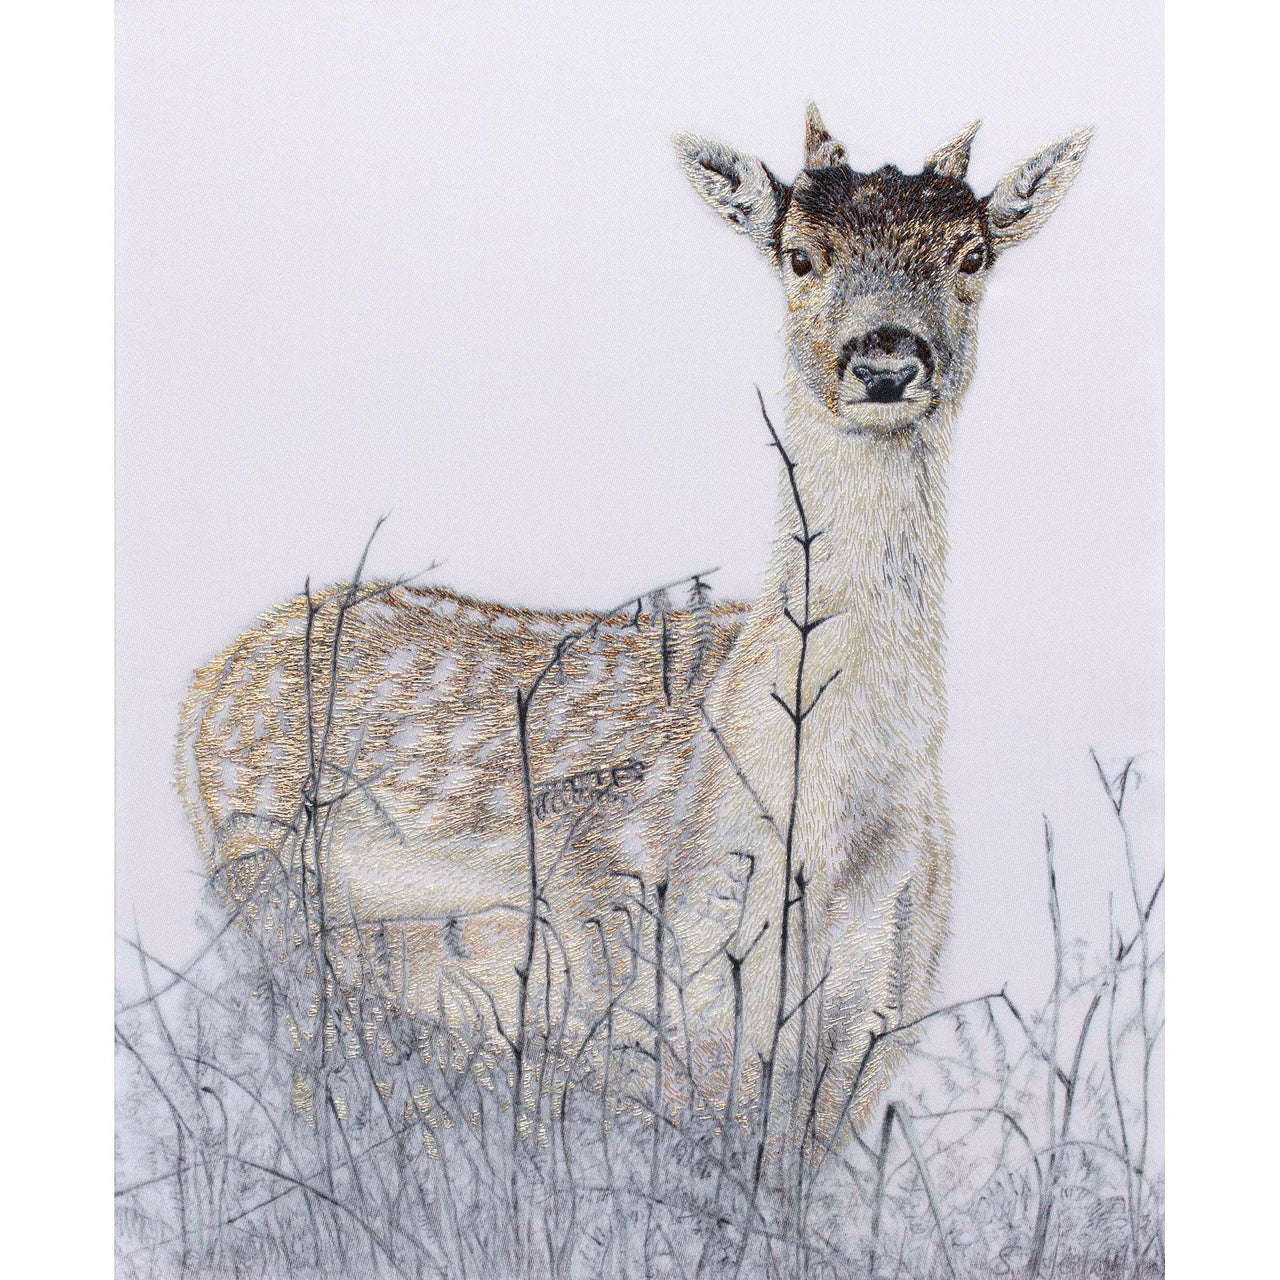 Original young deer hand embroidered artwork